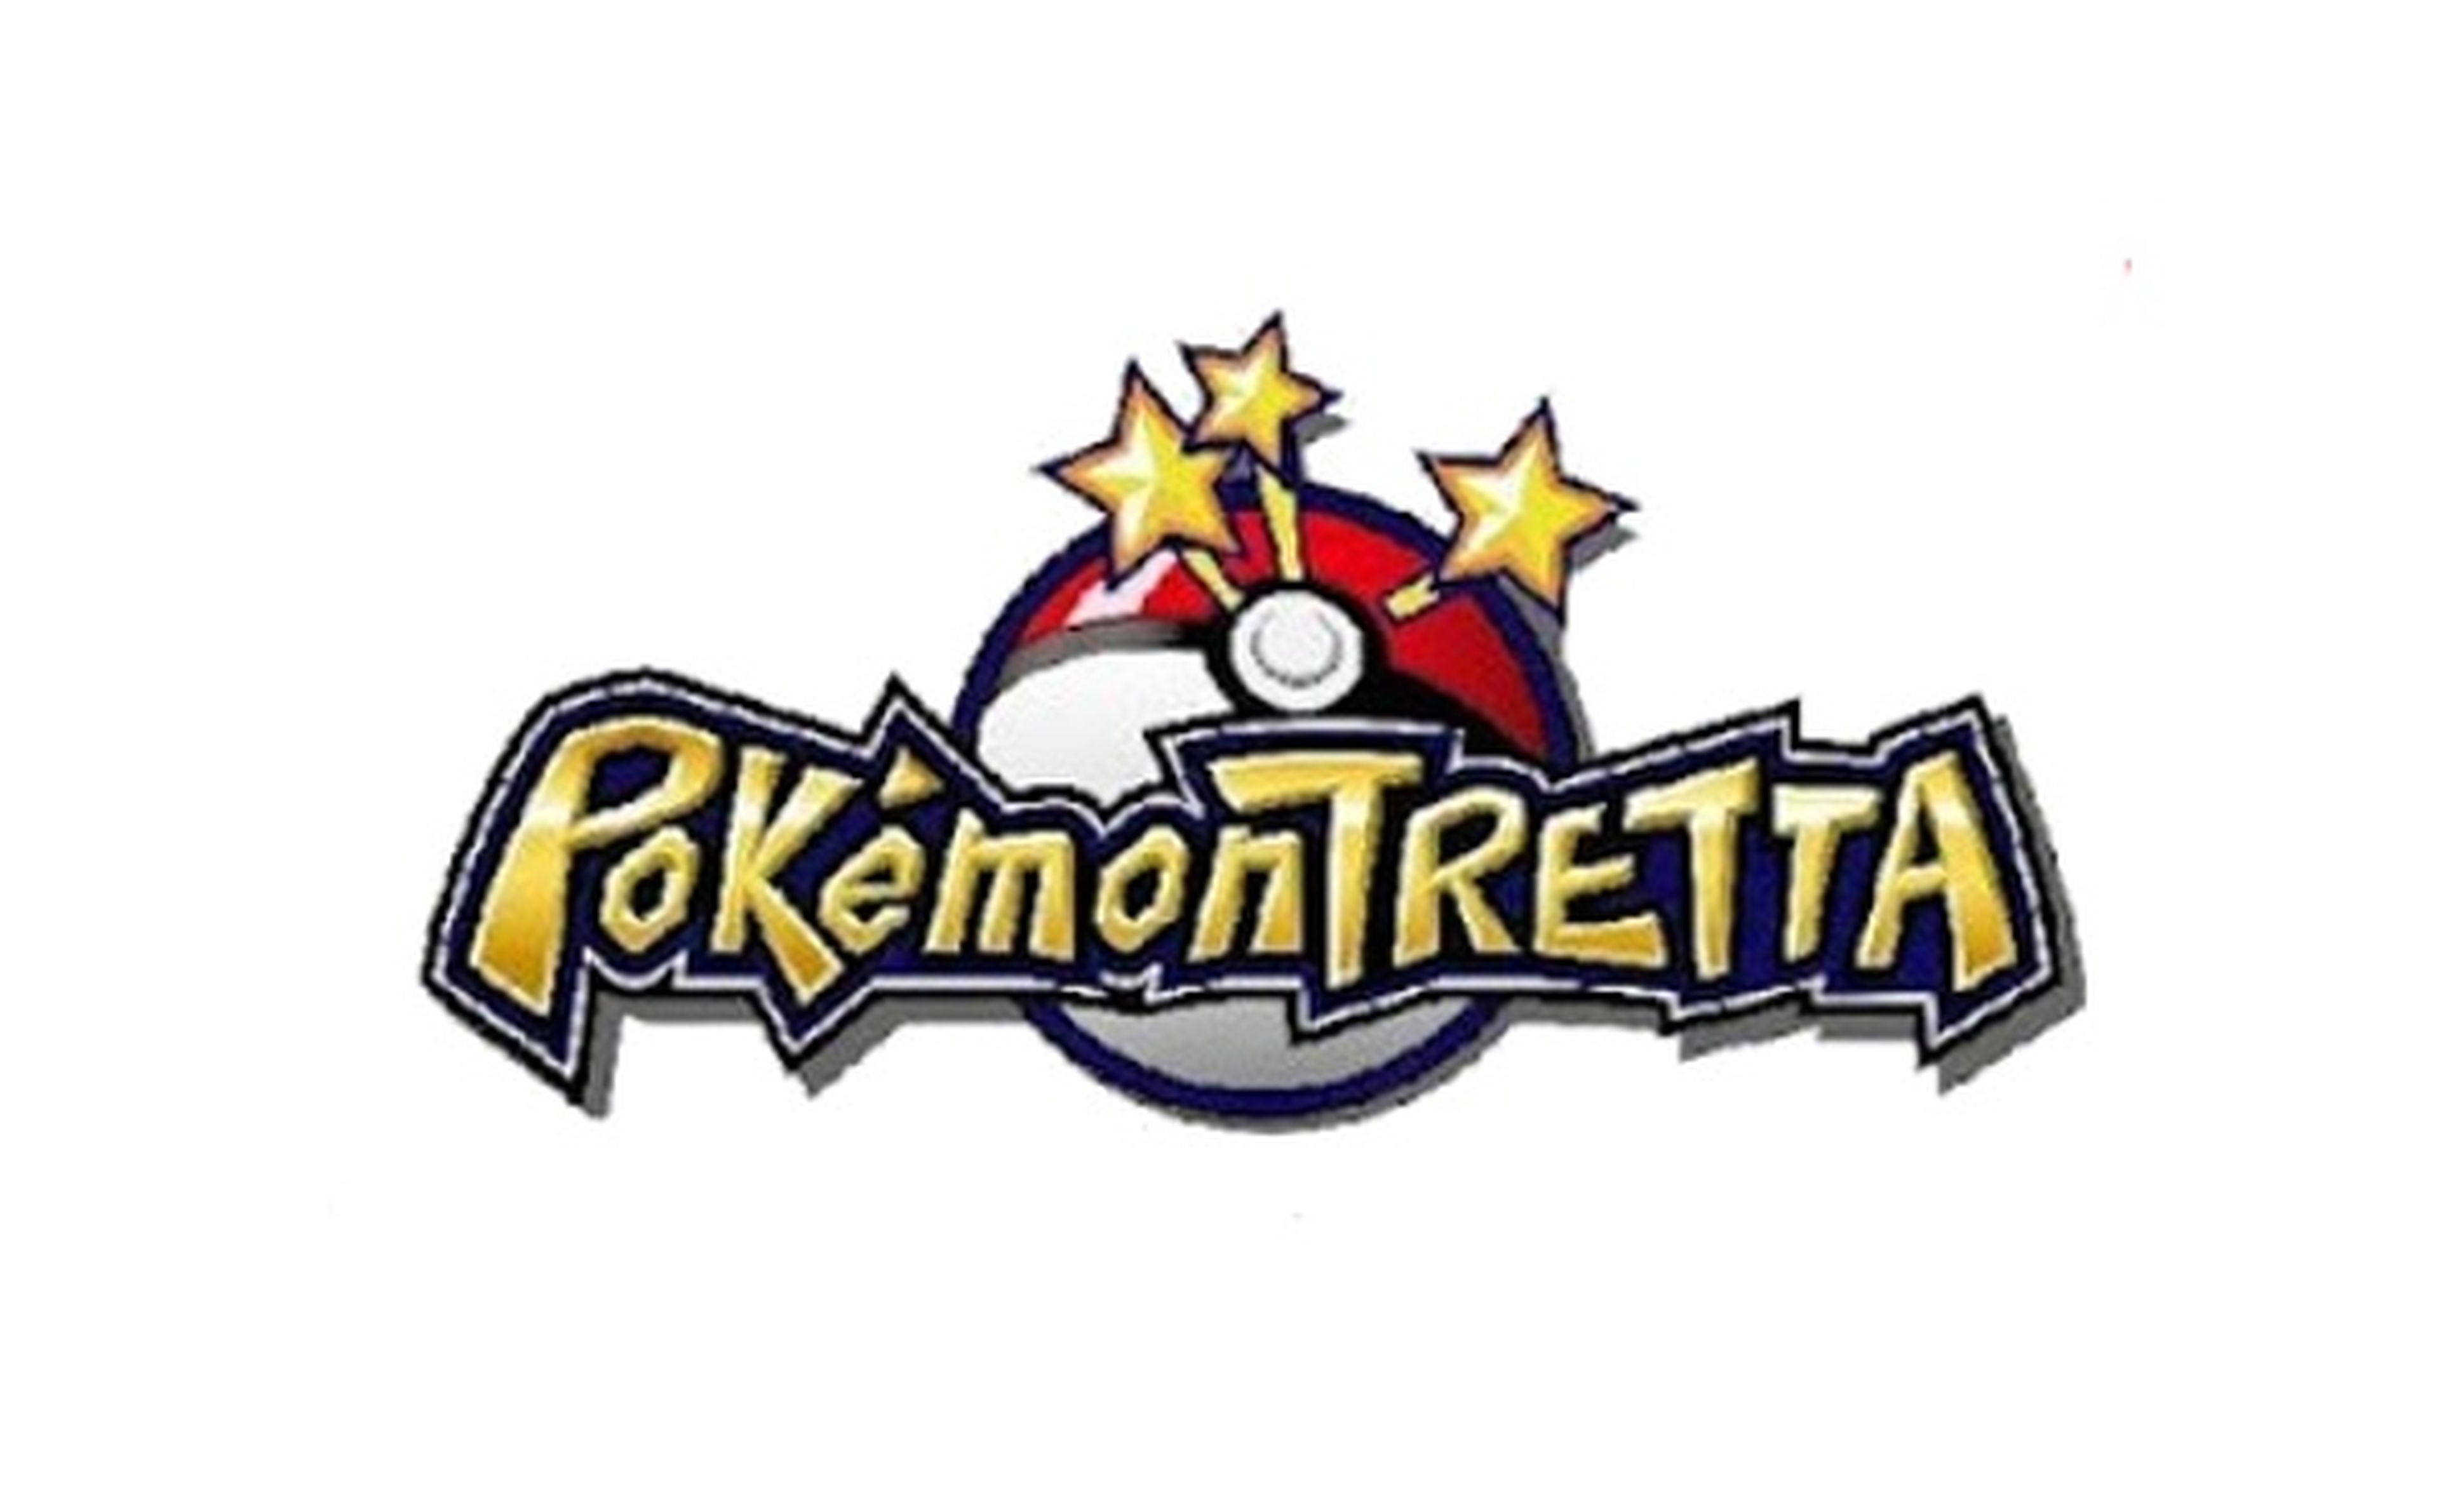 Pokémon TRETTA, un nuevo título por caer